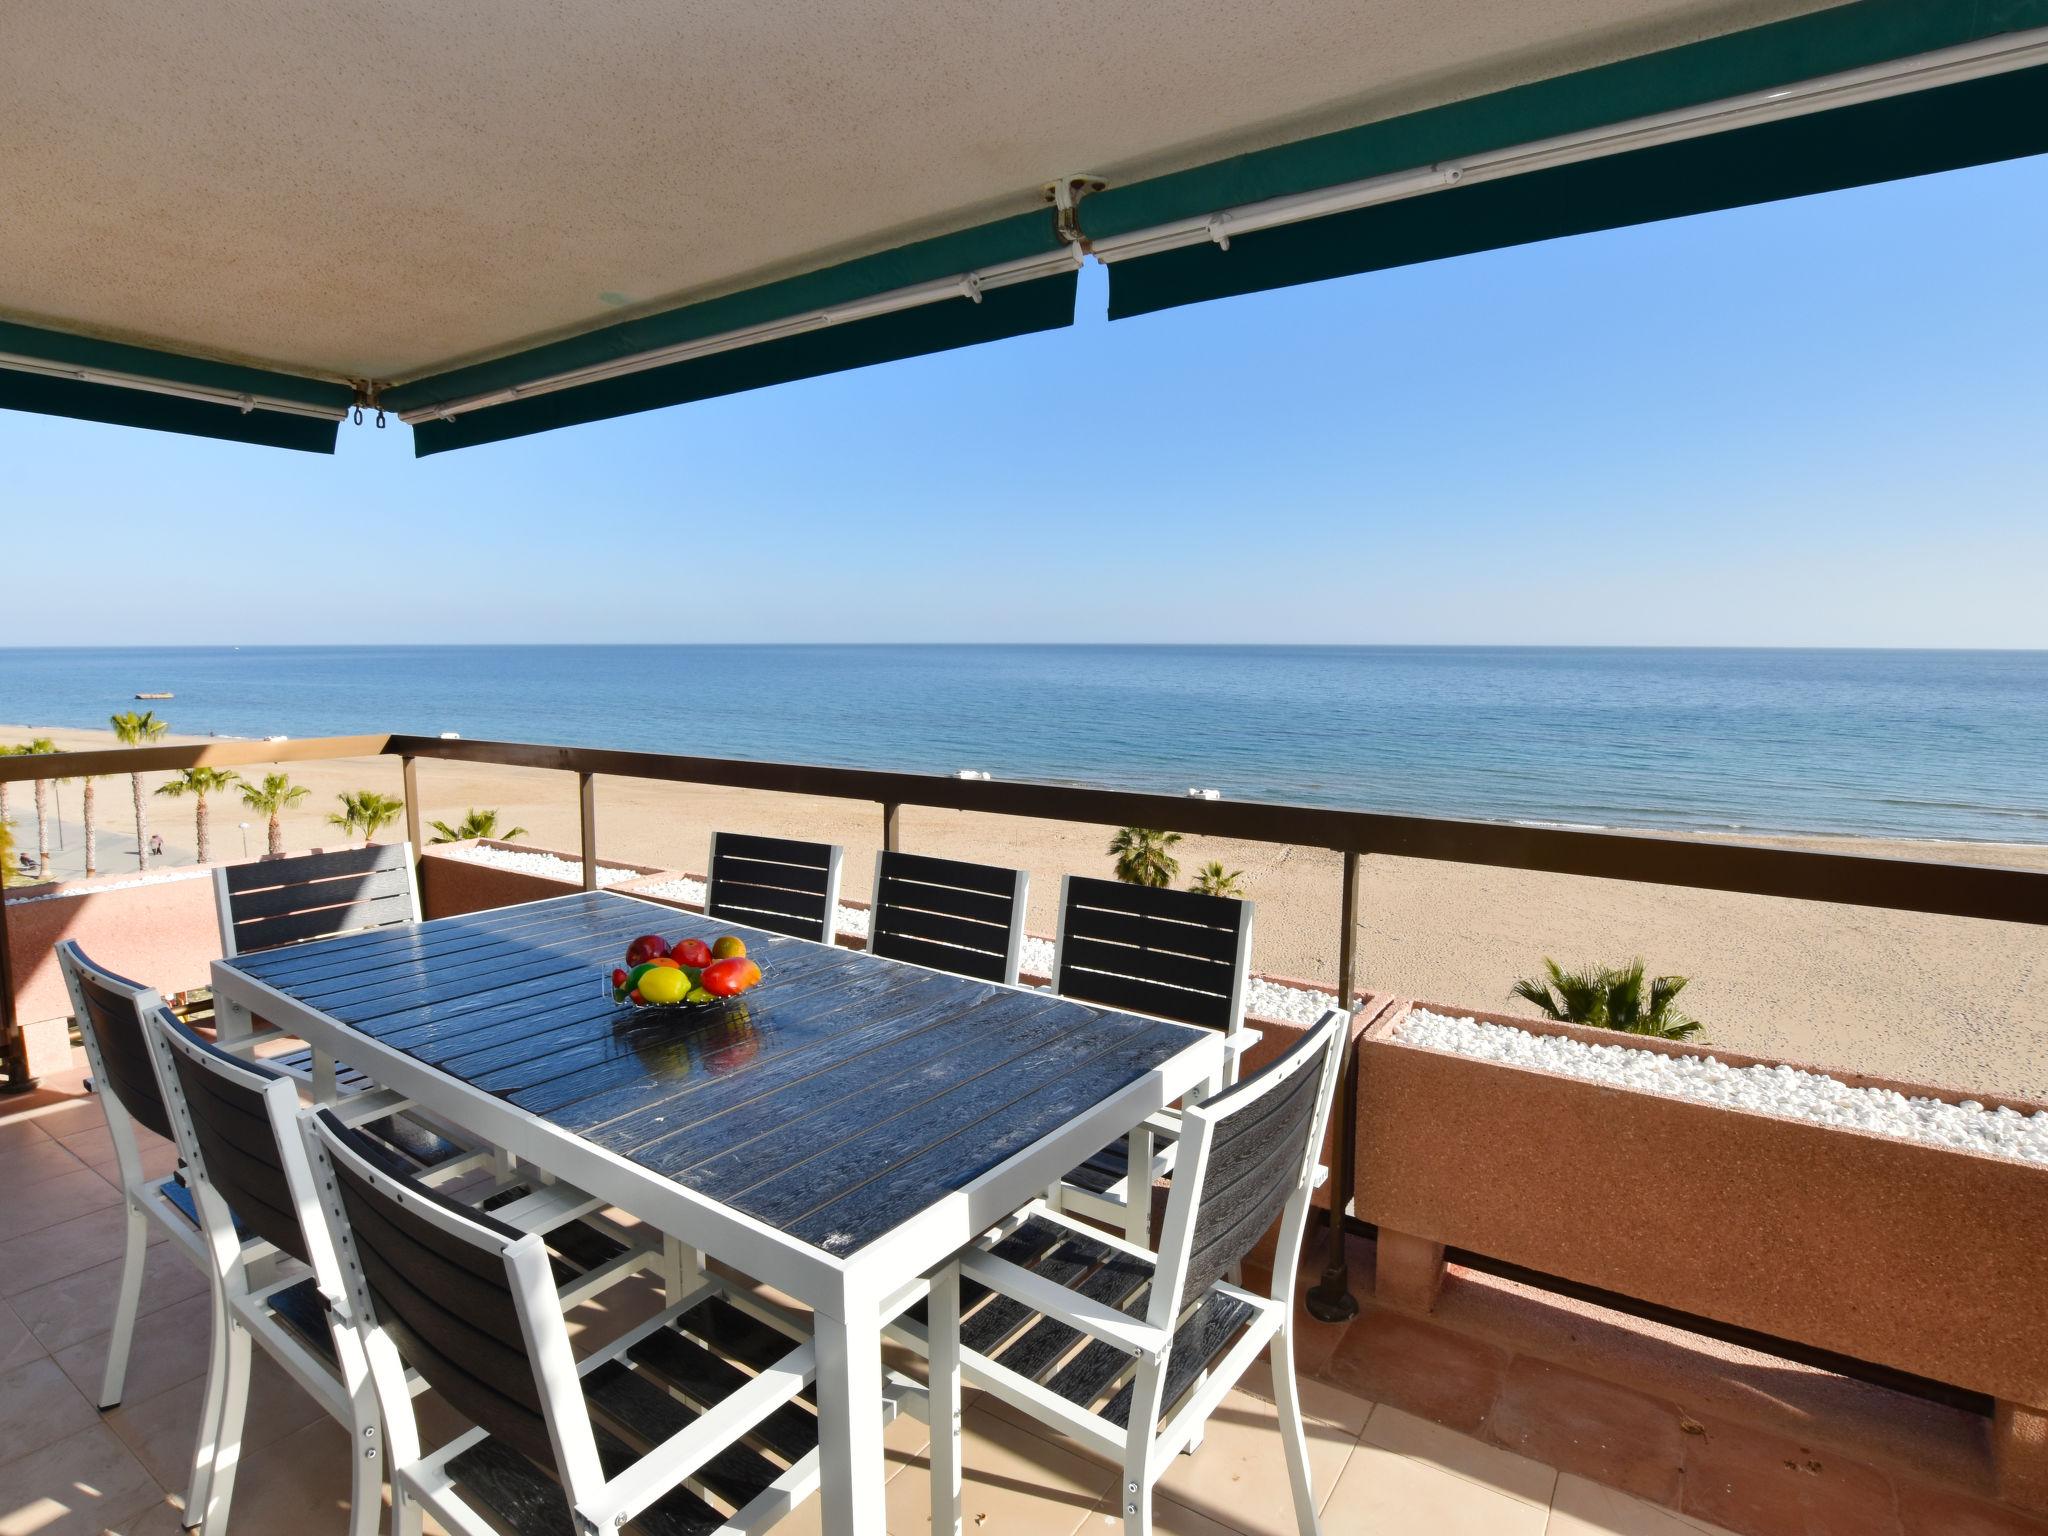 Photo 1 - Appartement de 4 chambres à Torredembarra avec piscine et vues à la mer